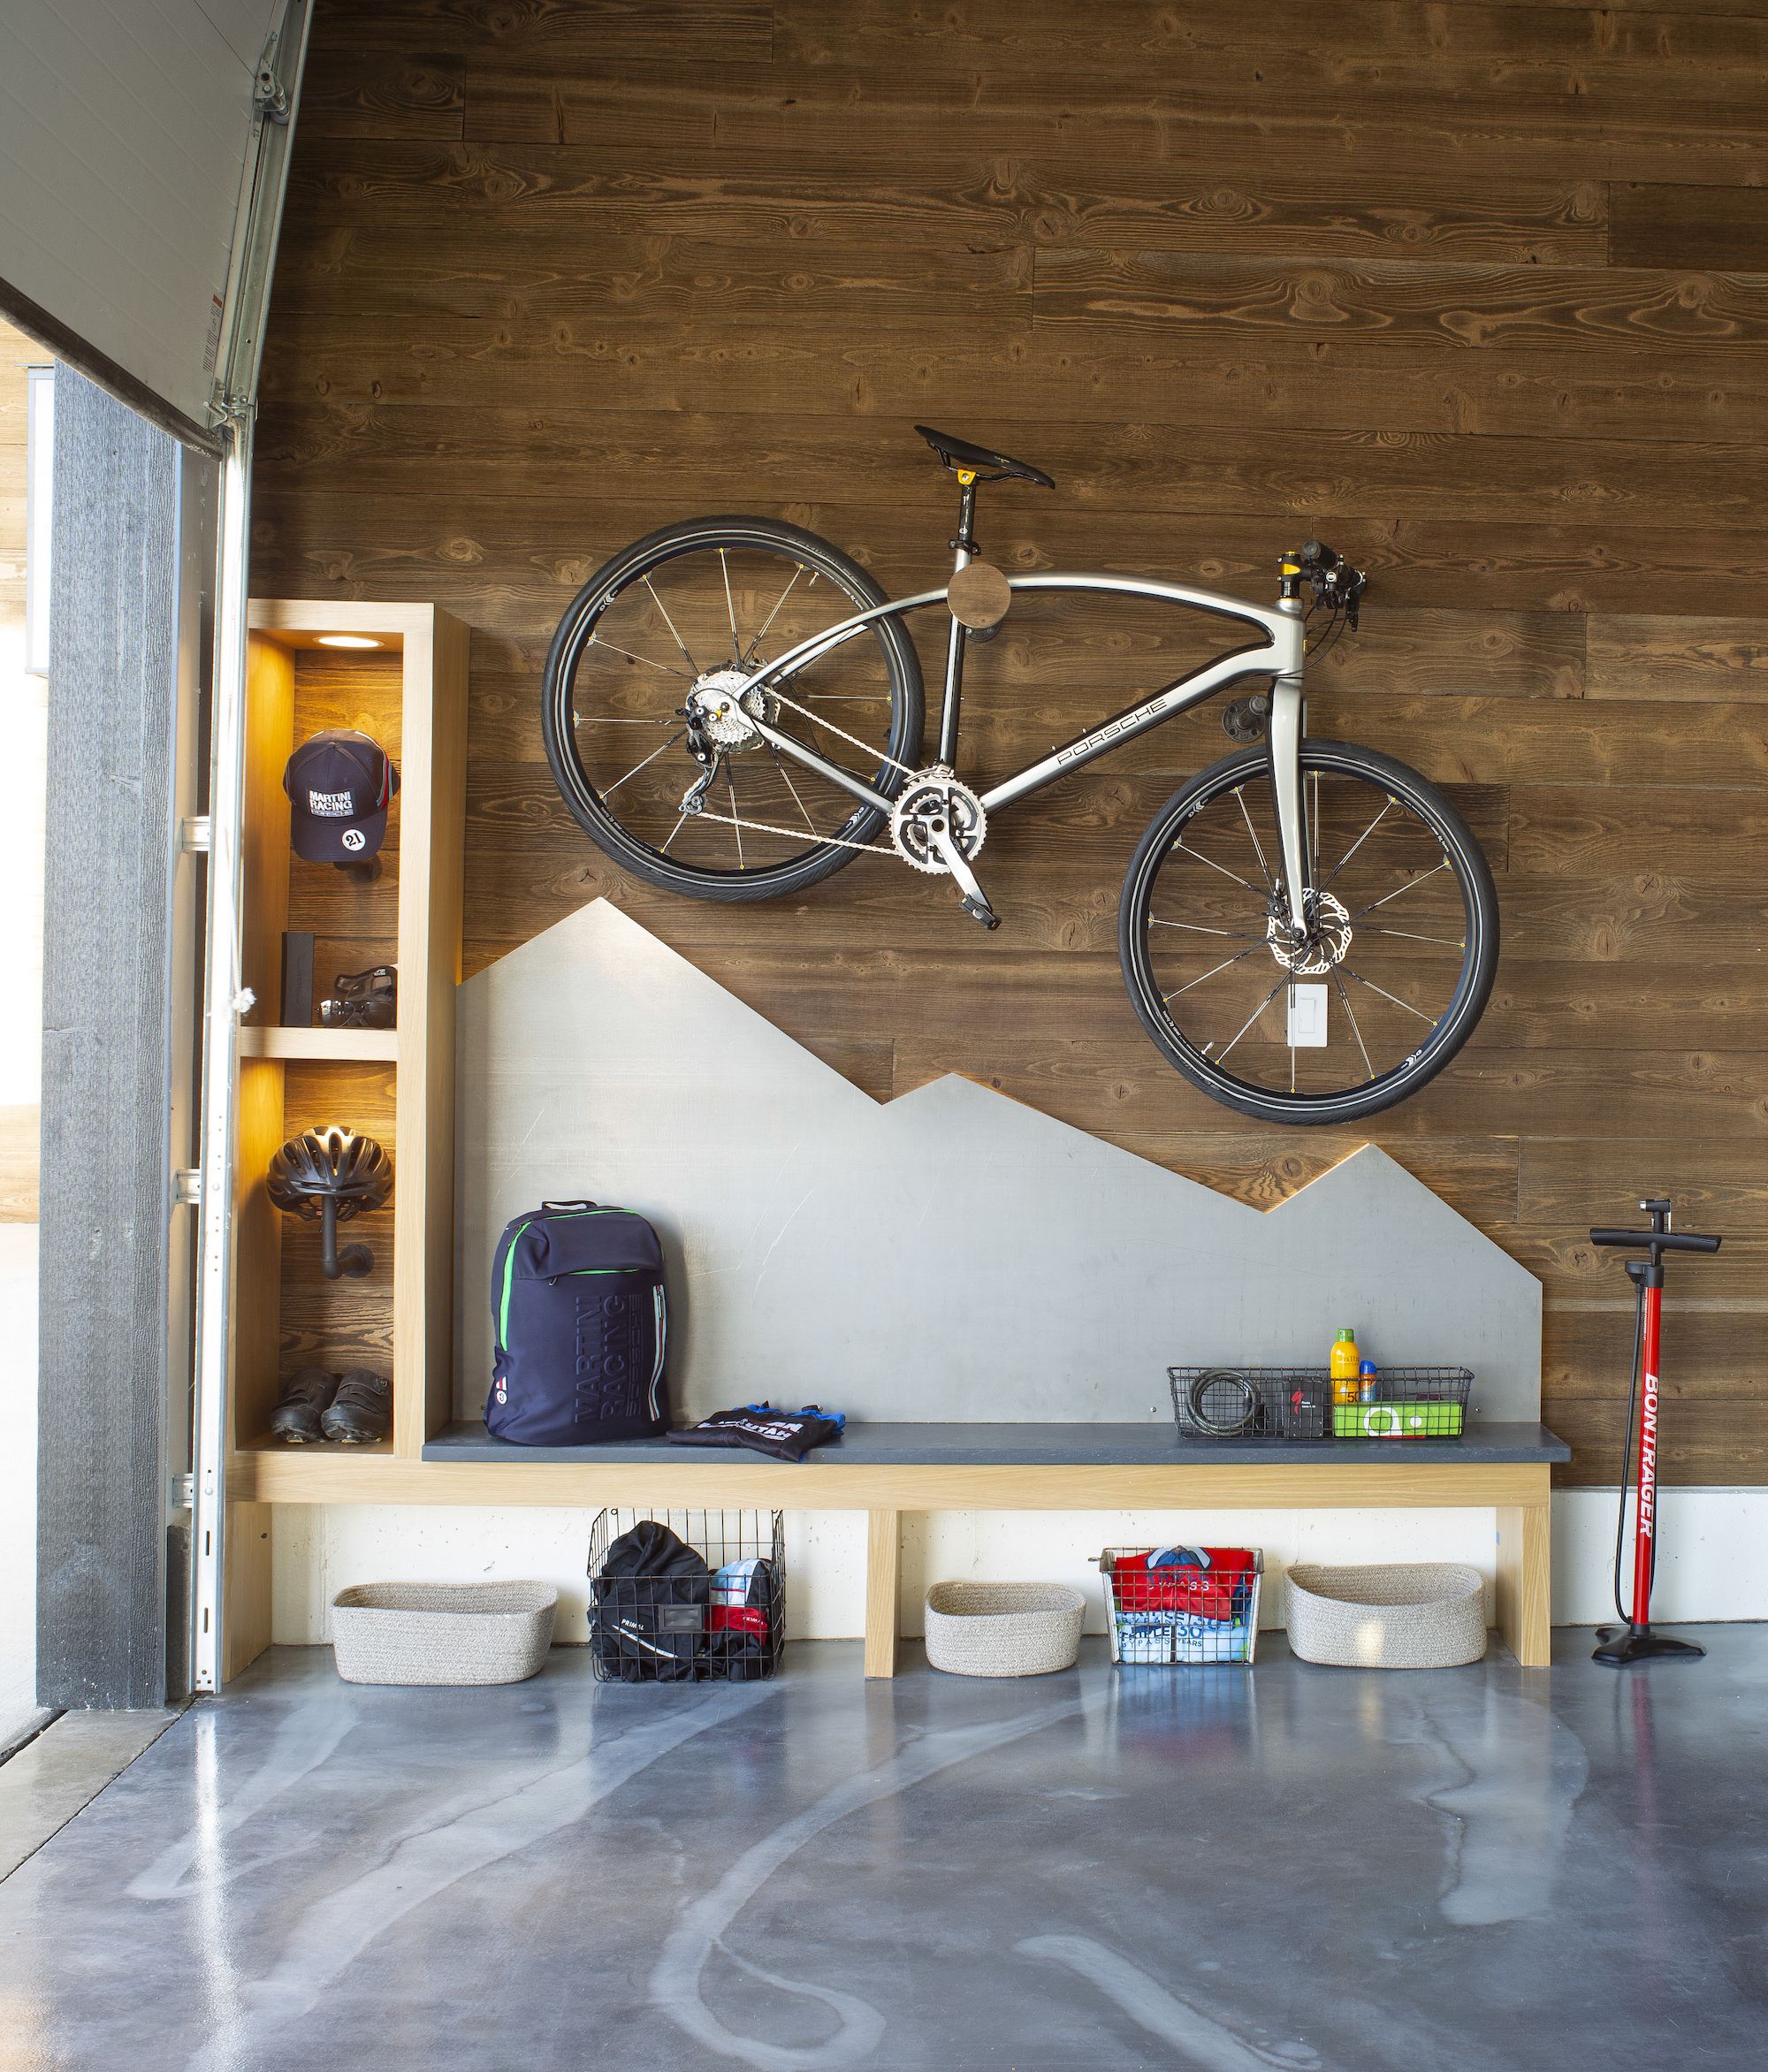 The Top 10 Bike Storage Ideas To Save